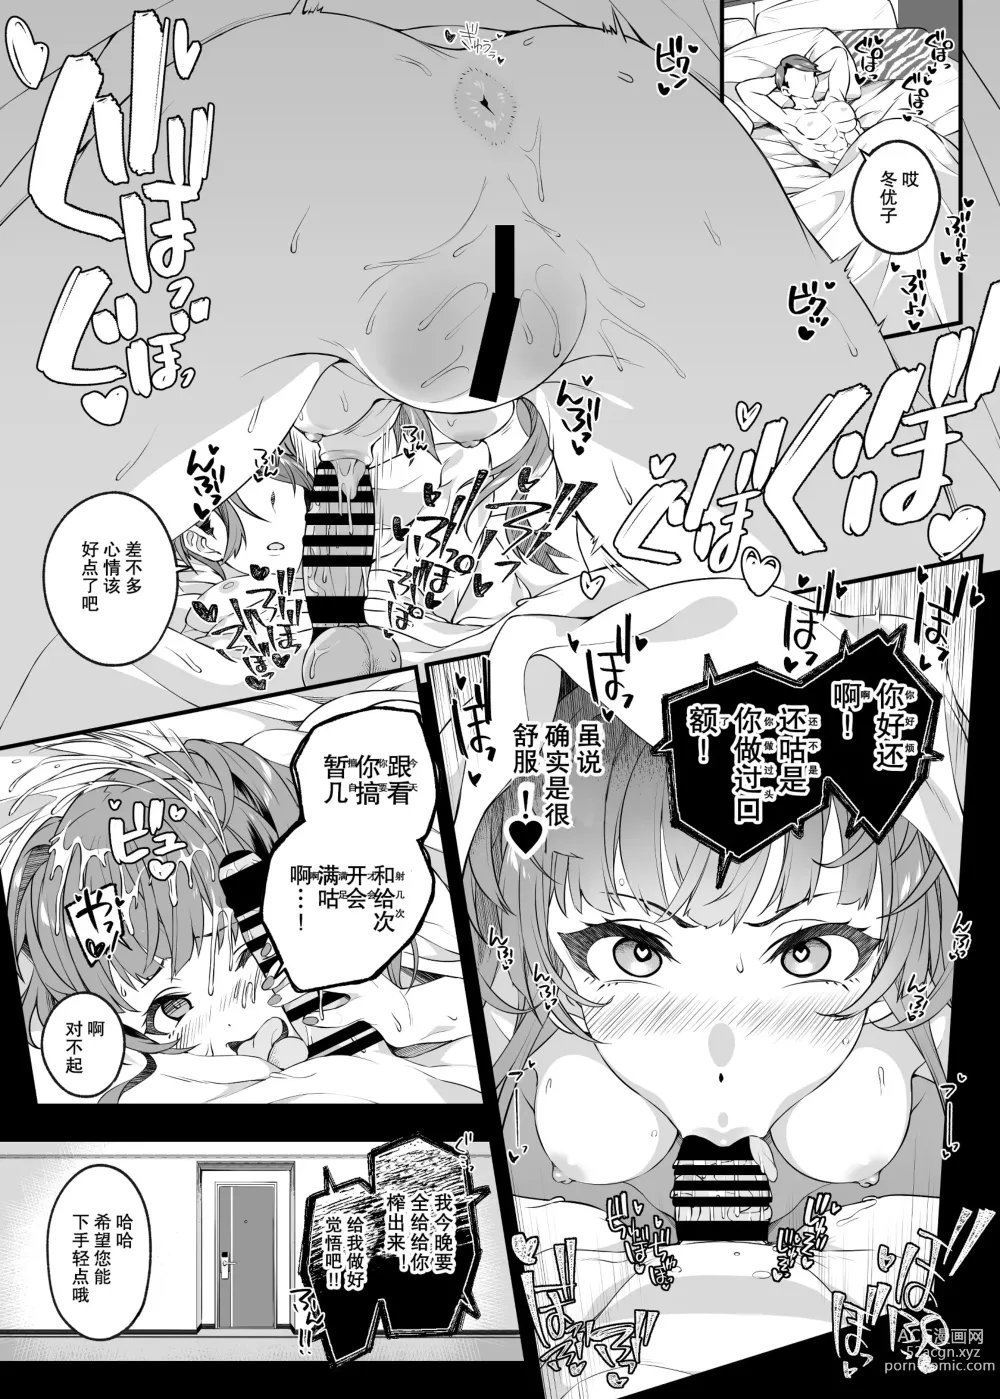 Page 30 of doujinshi 比看起来更会想的女人